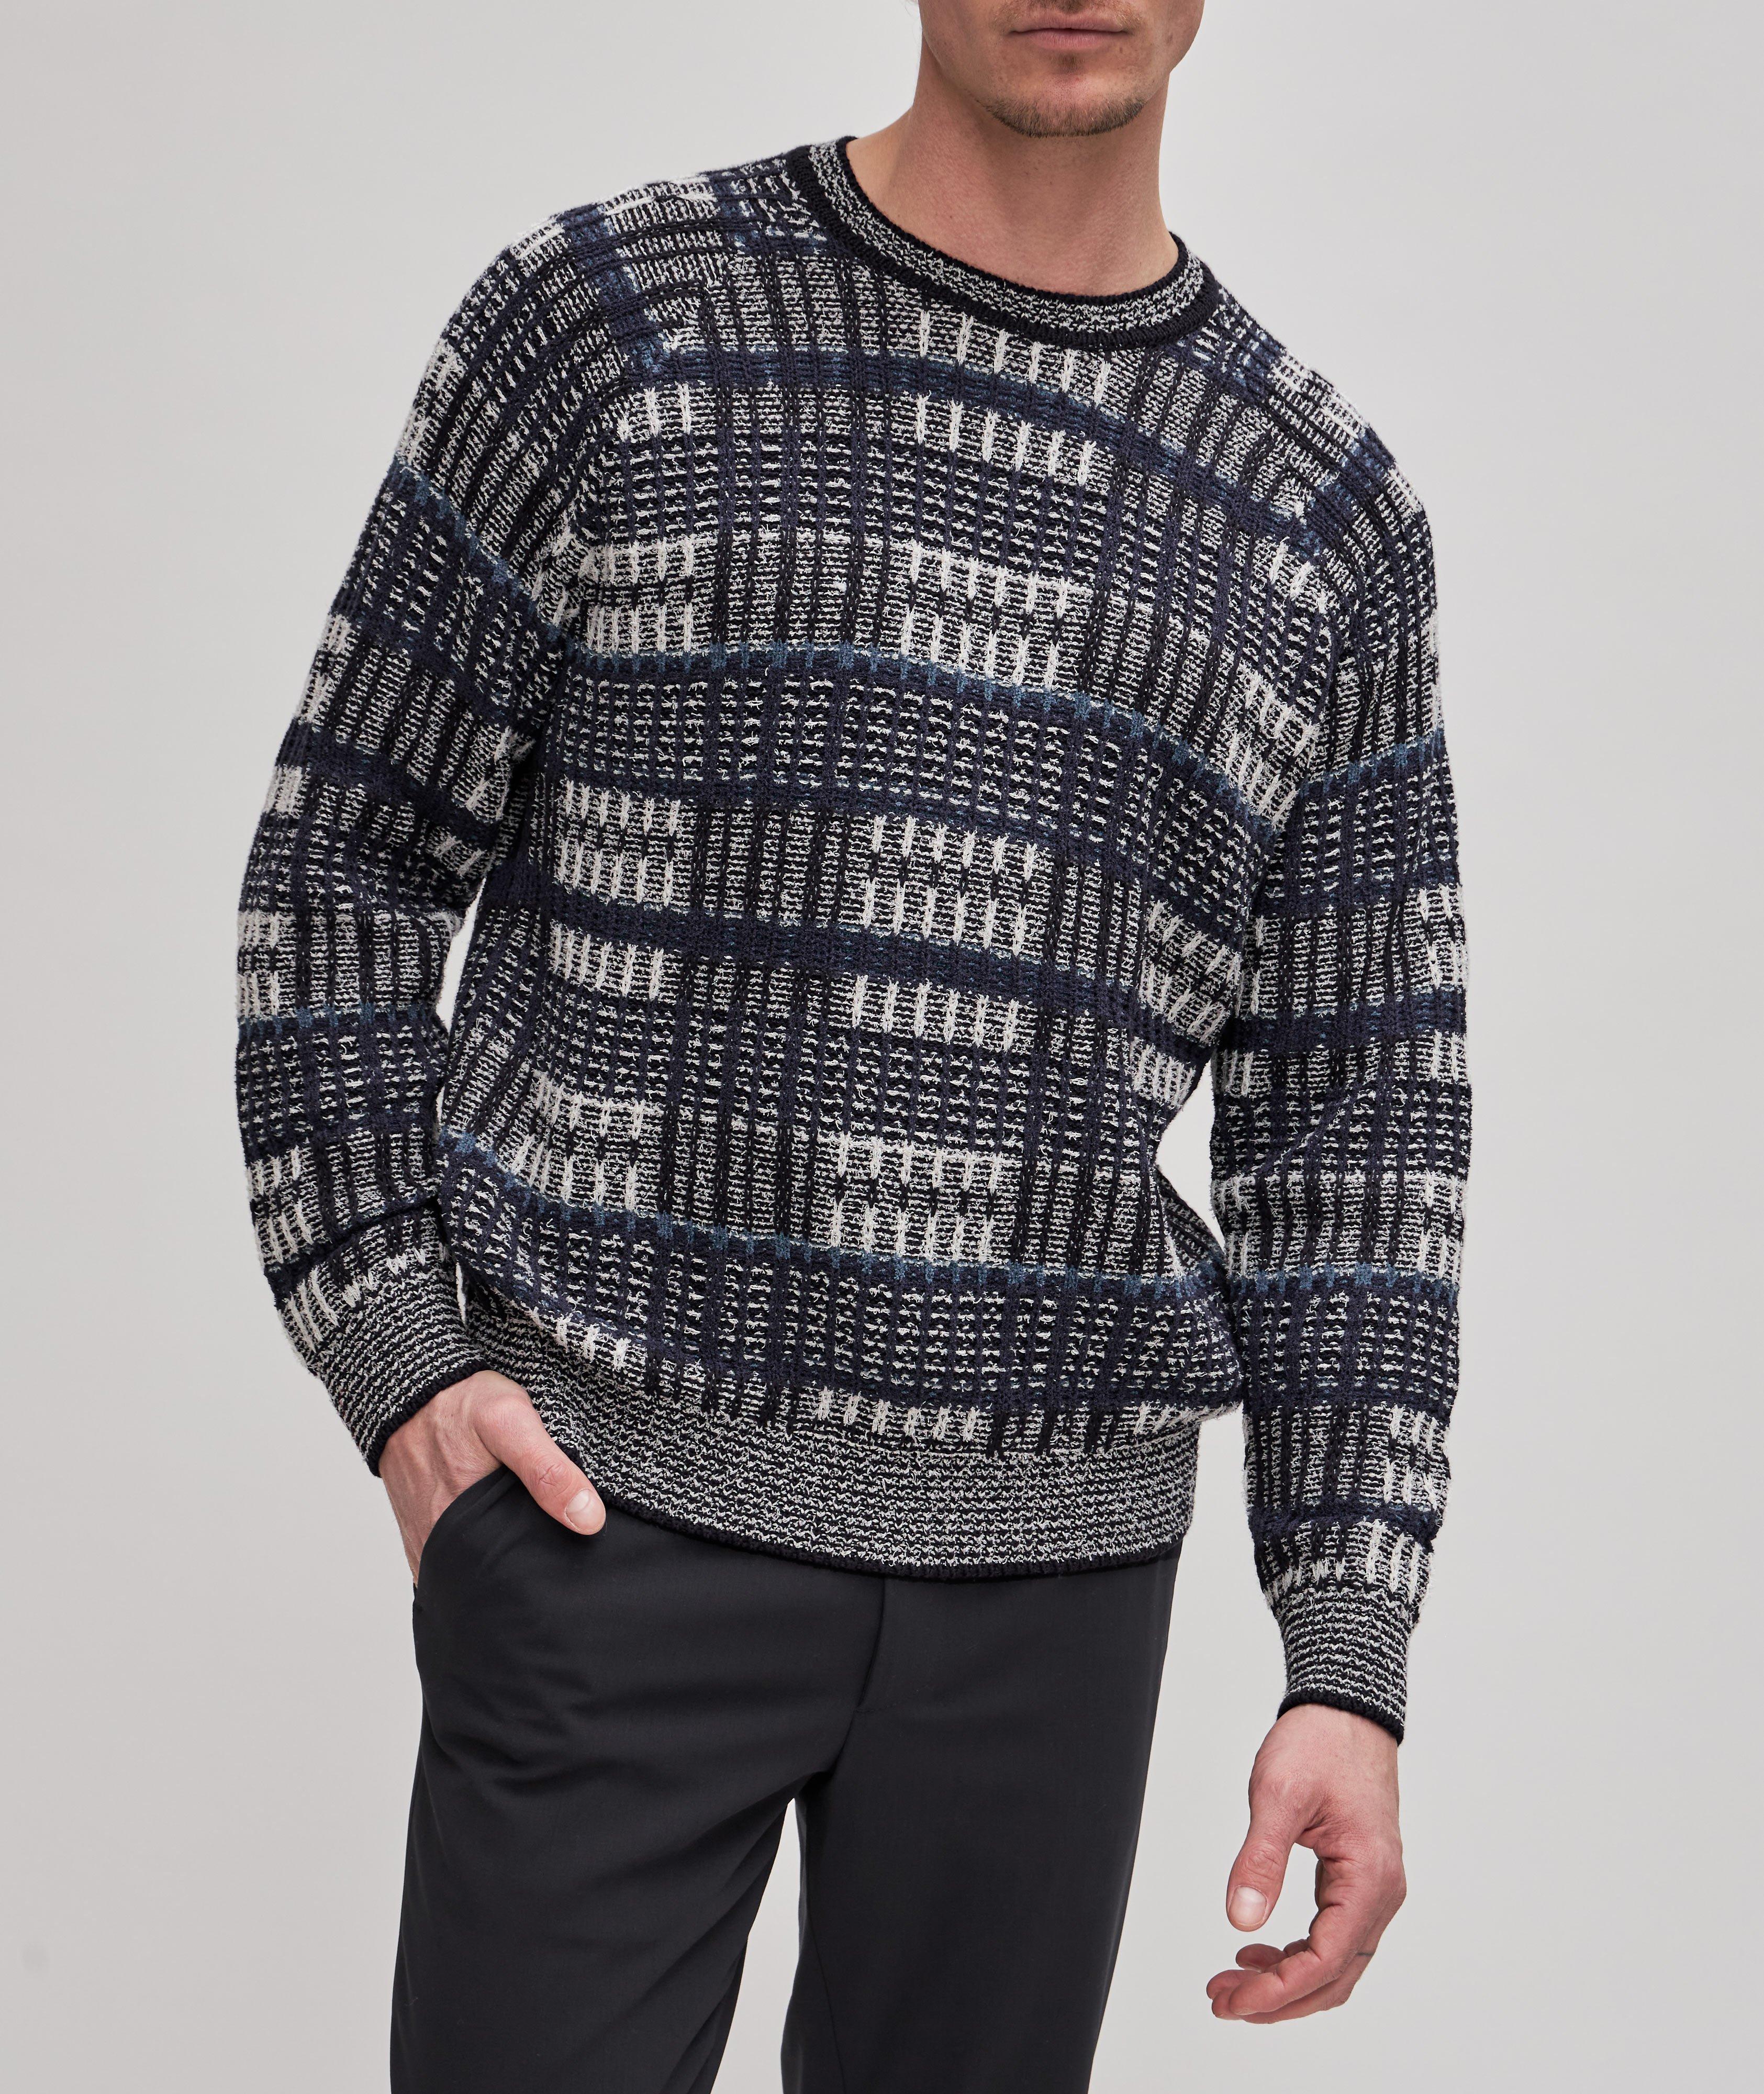 Retro Plaid Jacquard Print Sweater image 1